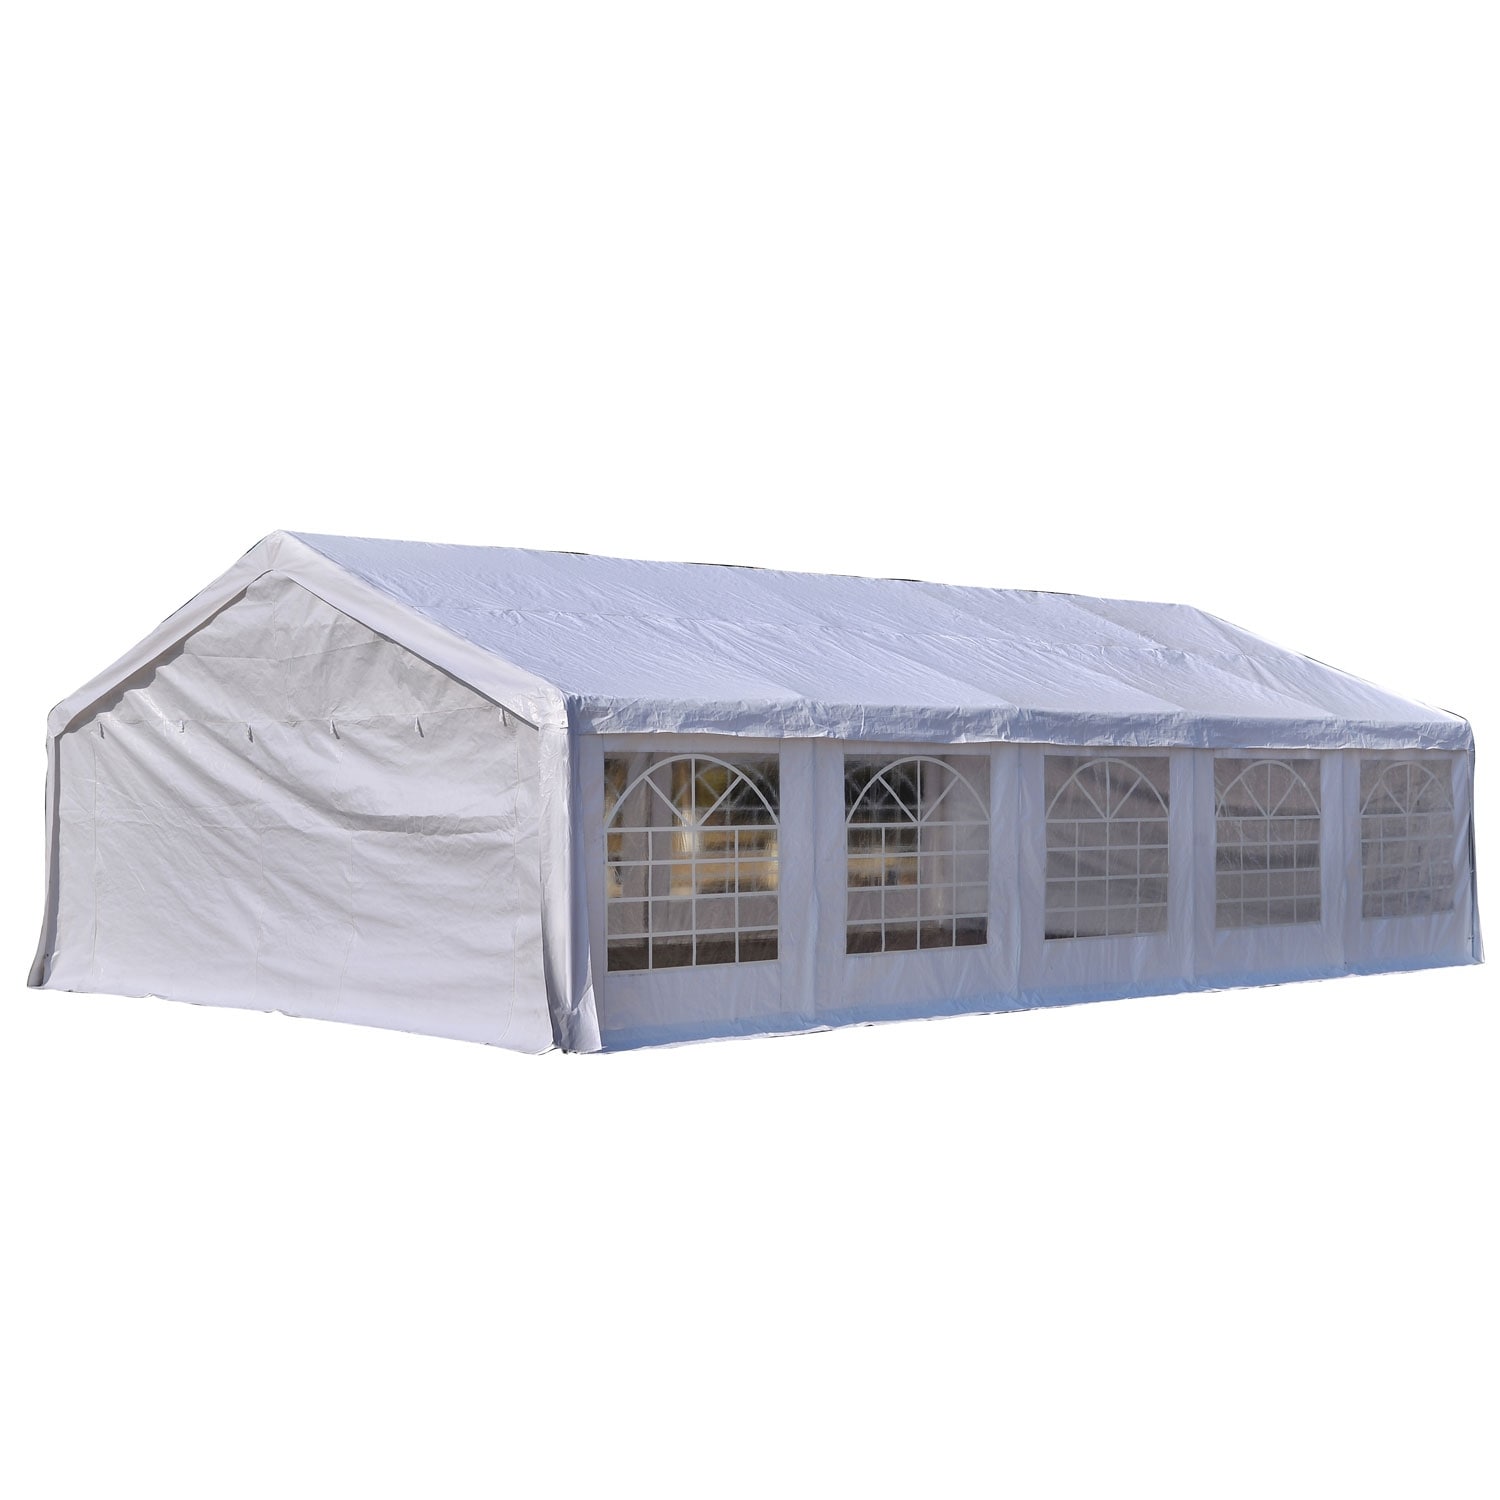 Outsunny Carport Wedding Tent 32x 20